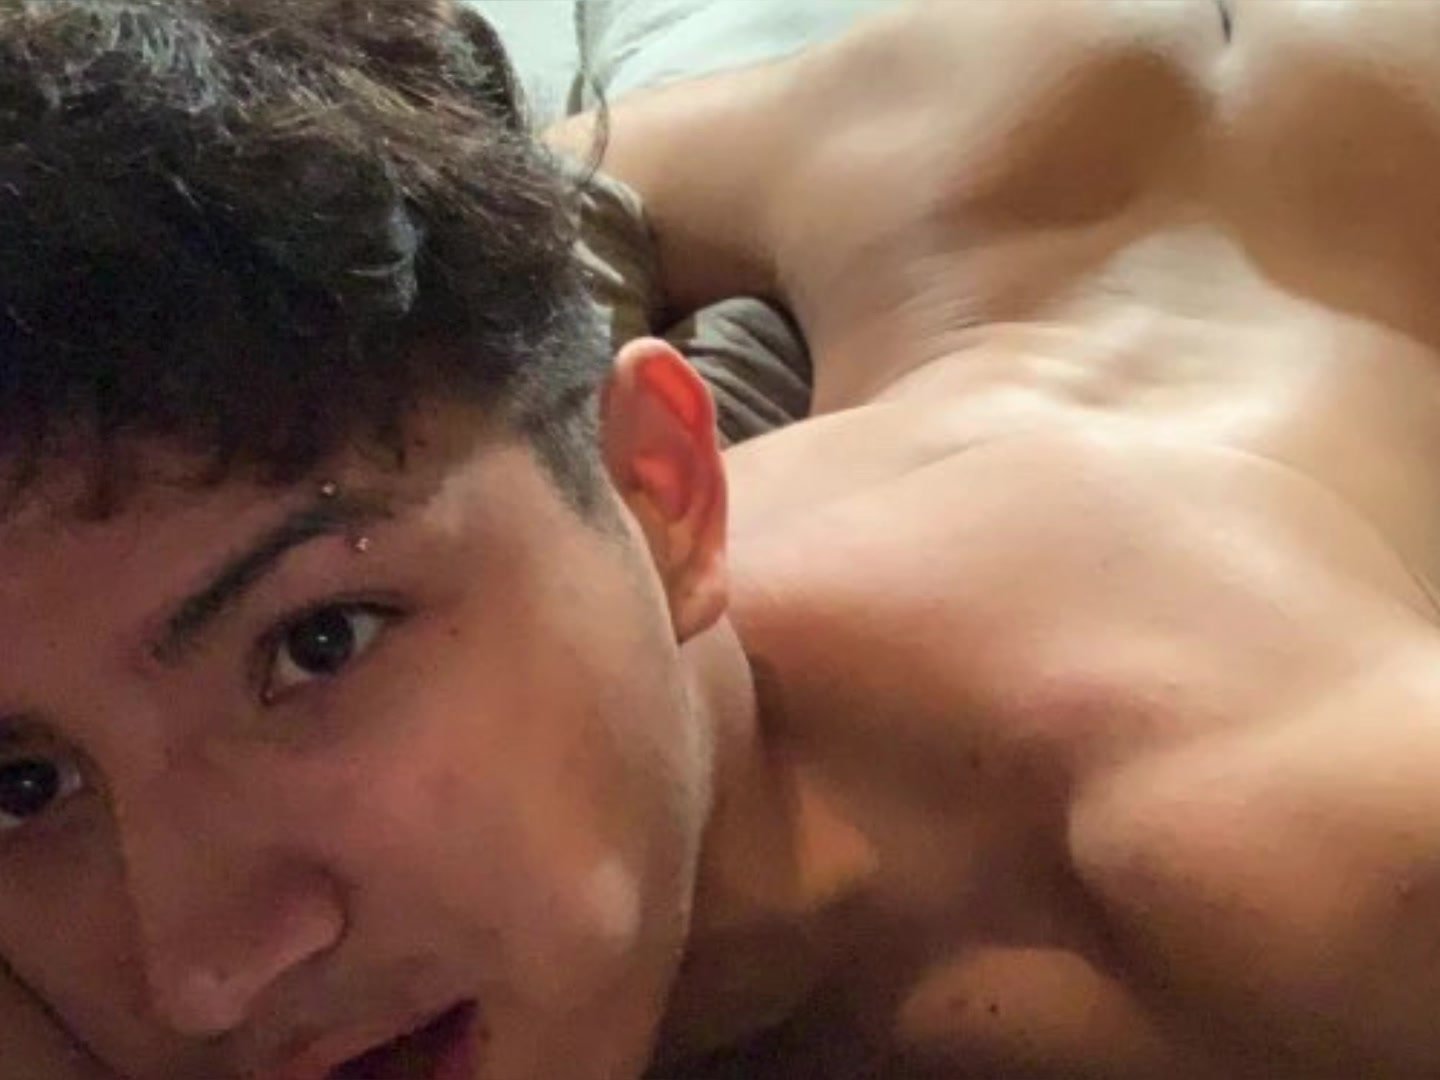 Sexy Pierced Boy Shows Off His Body